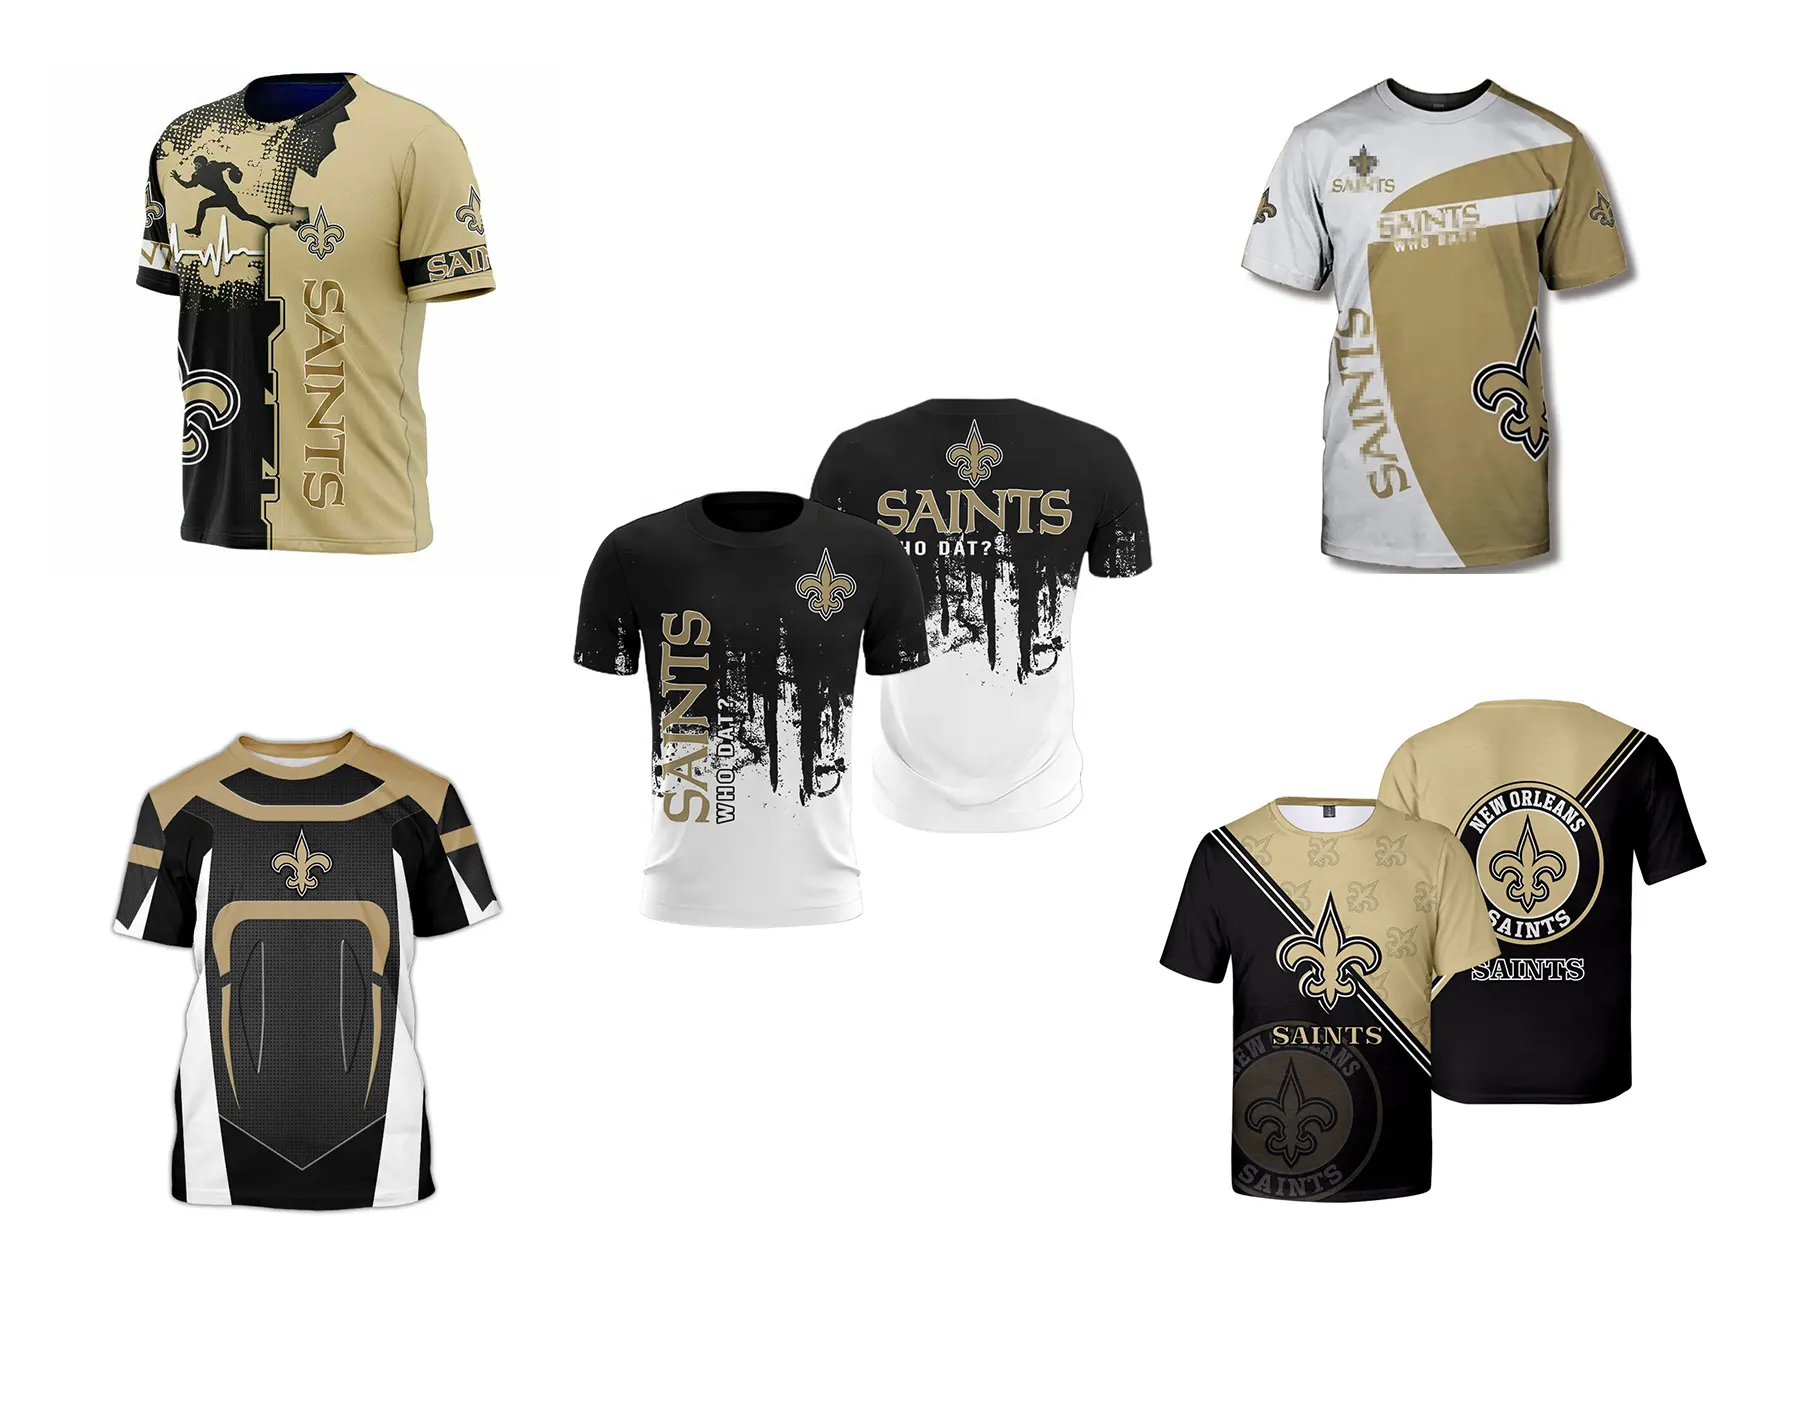 Factory High Quality NFL Teams Saint 3D print Summer Men American size Football T shirts